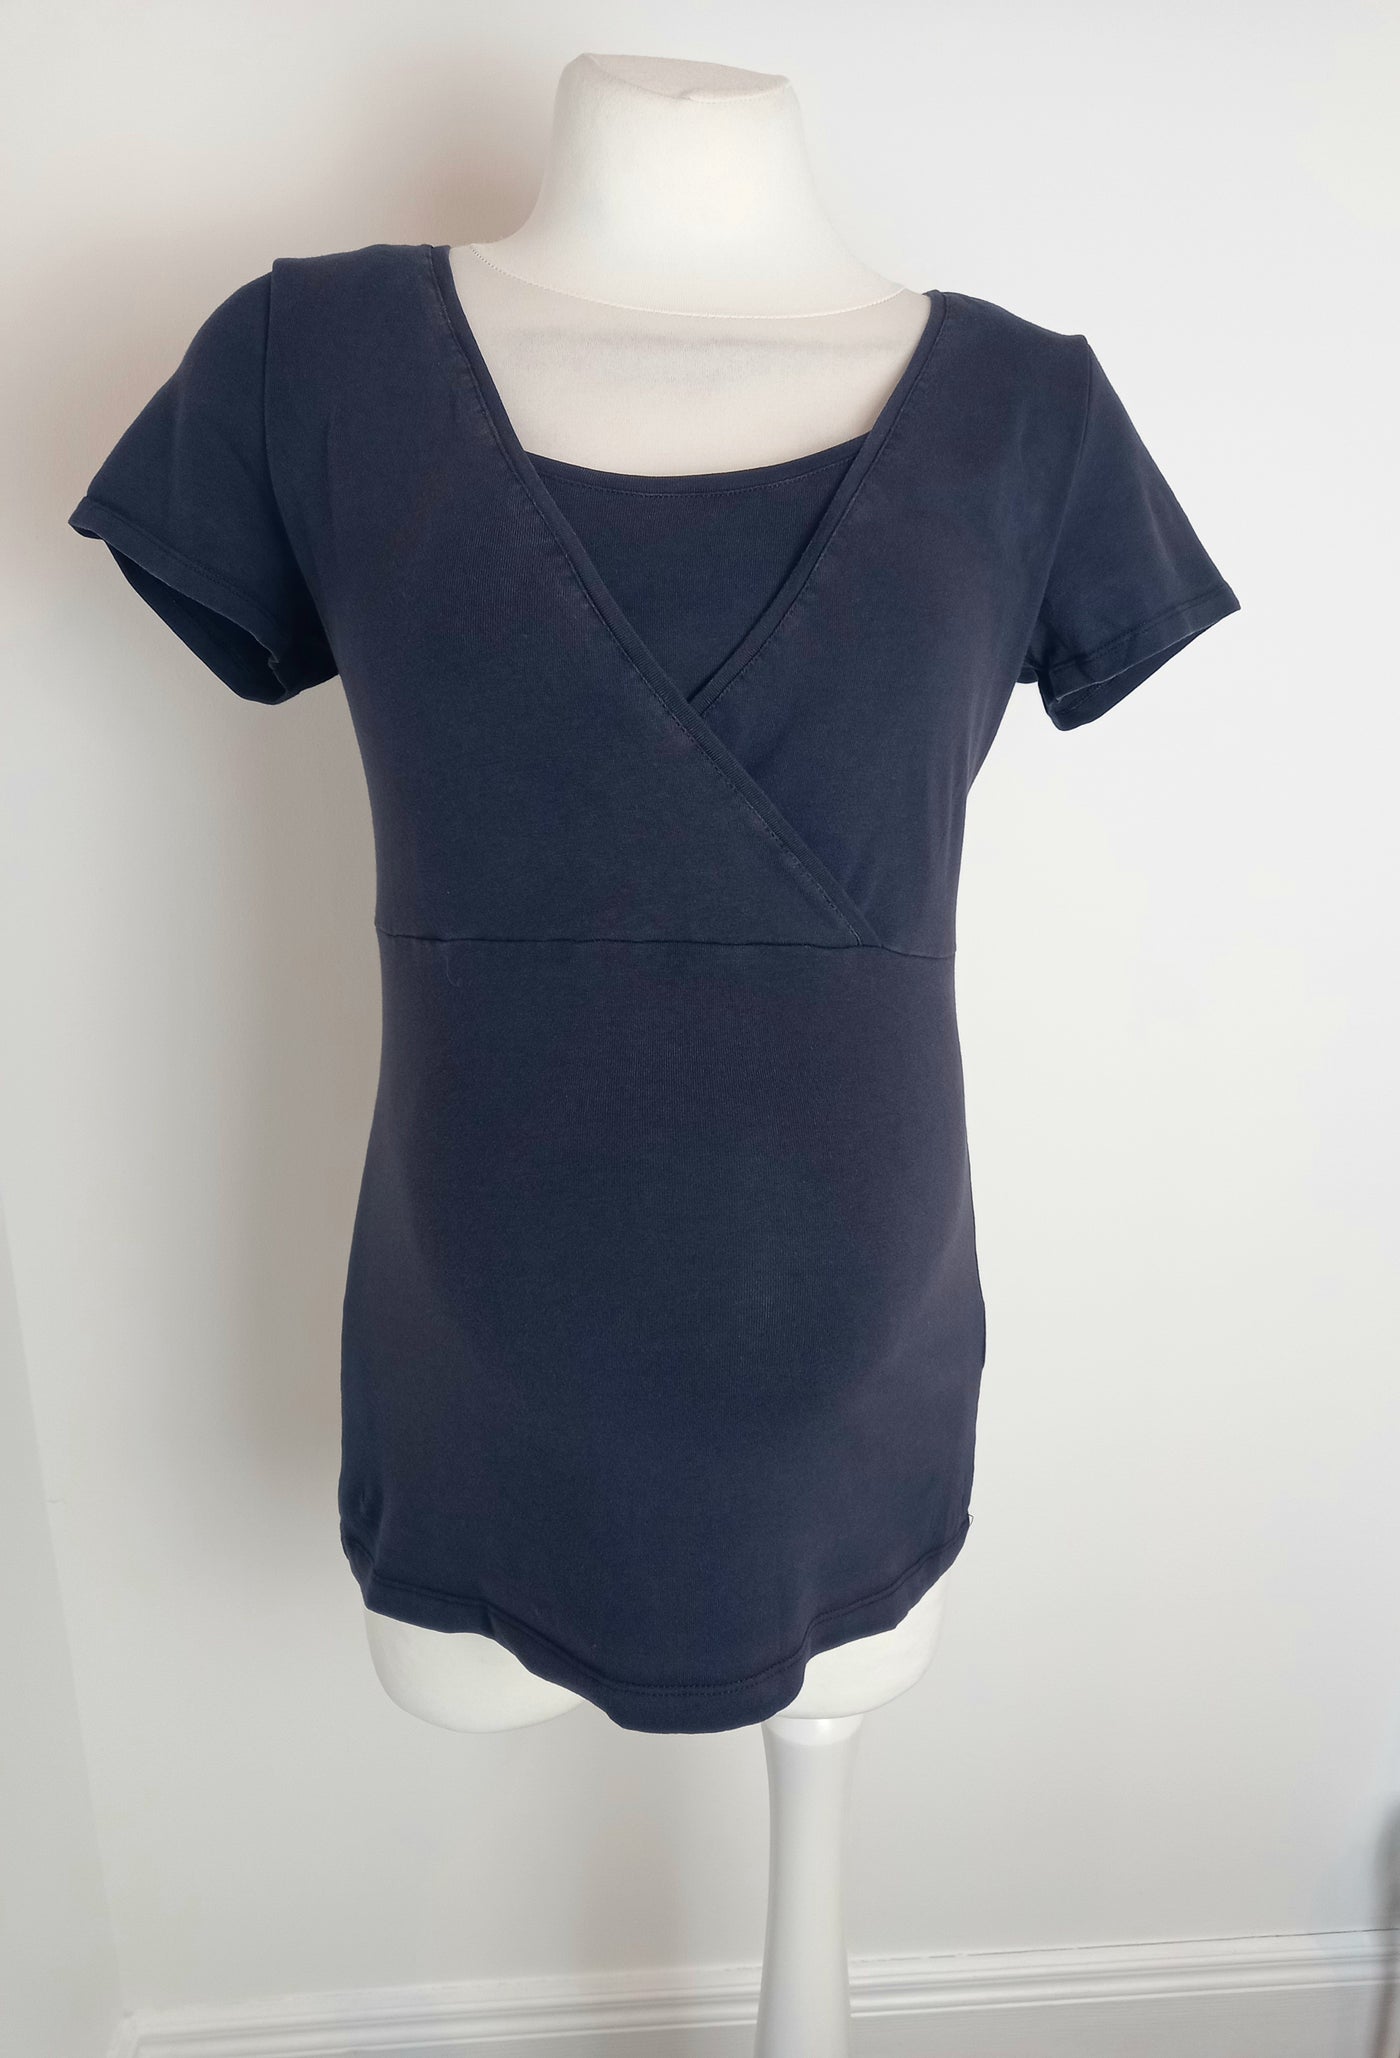 H&M Mama navy short sleeved nursing top - Size M (Approx UK 10/12)